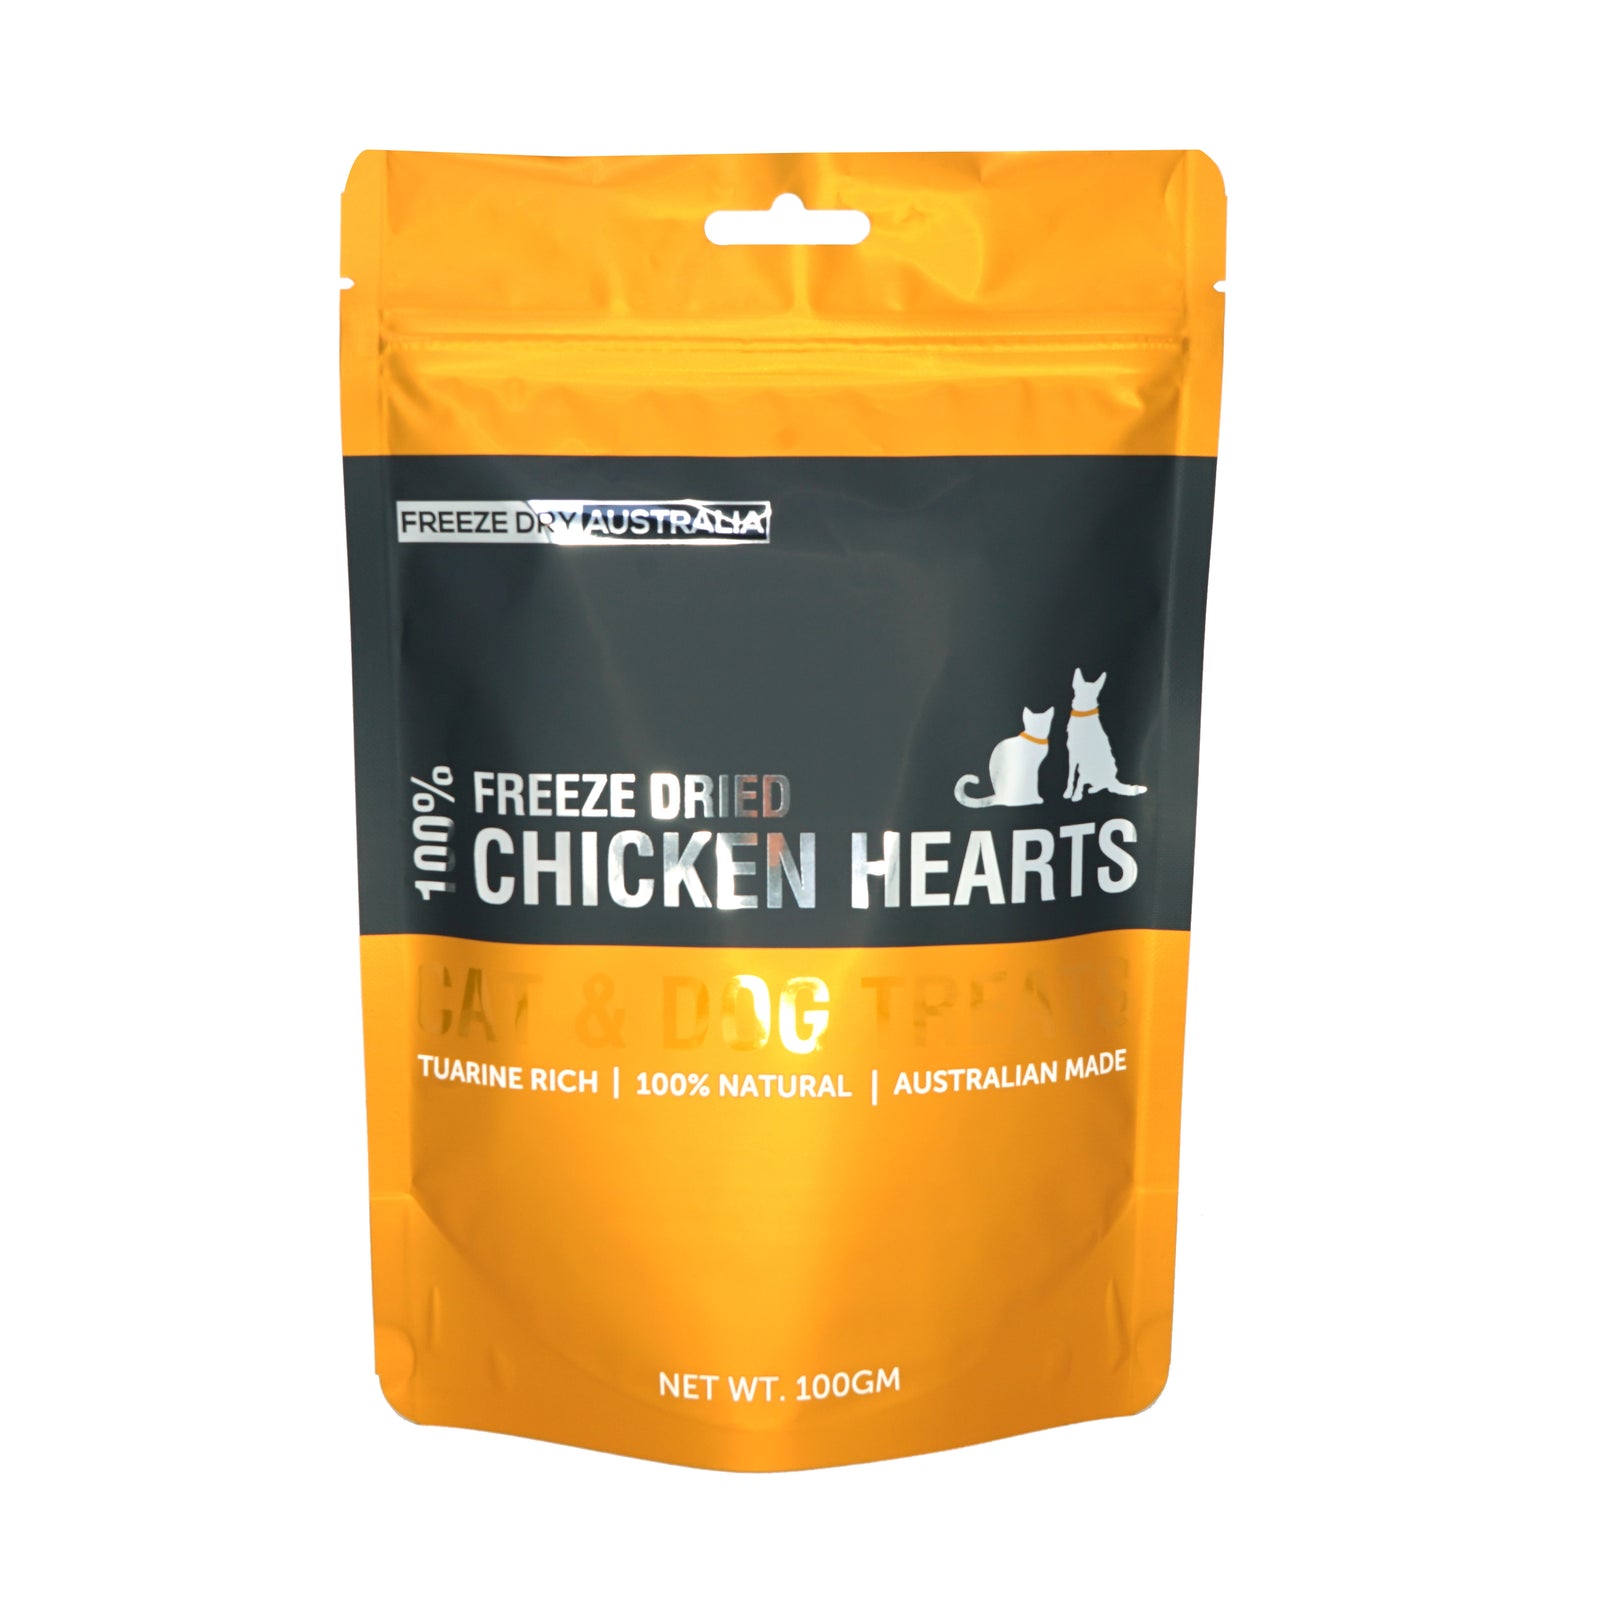 Freeze Dry Australia Chicken Hearts 100g